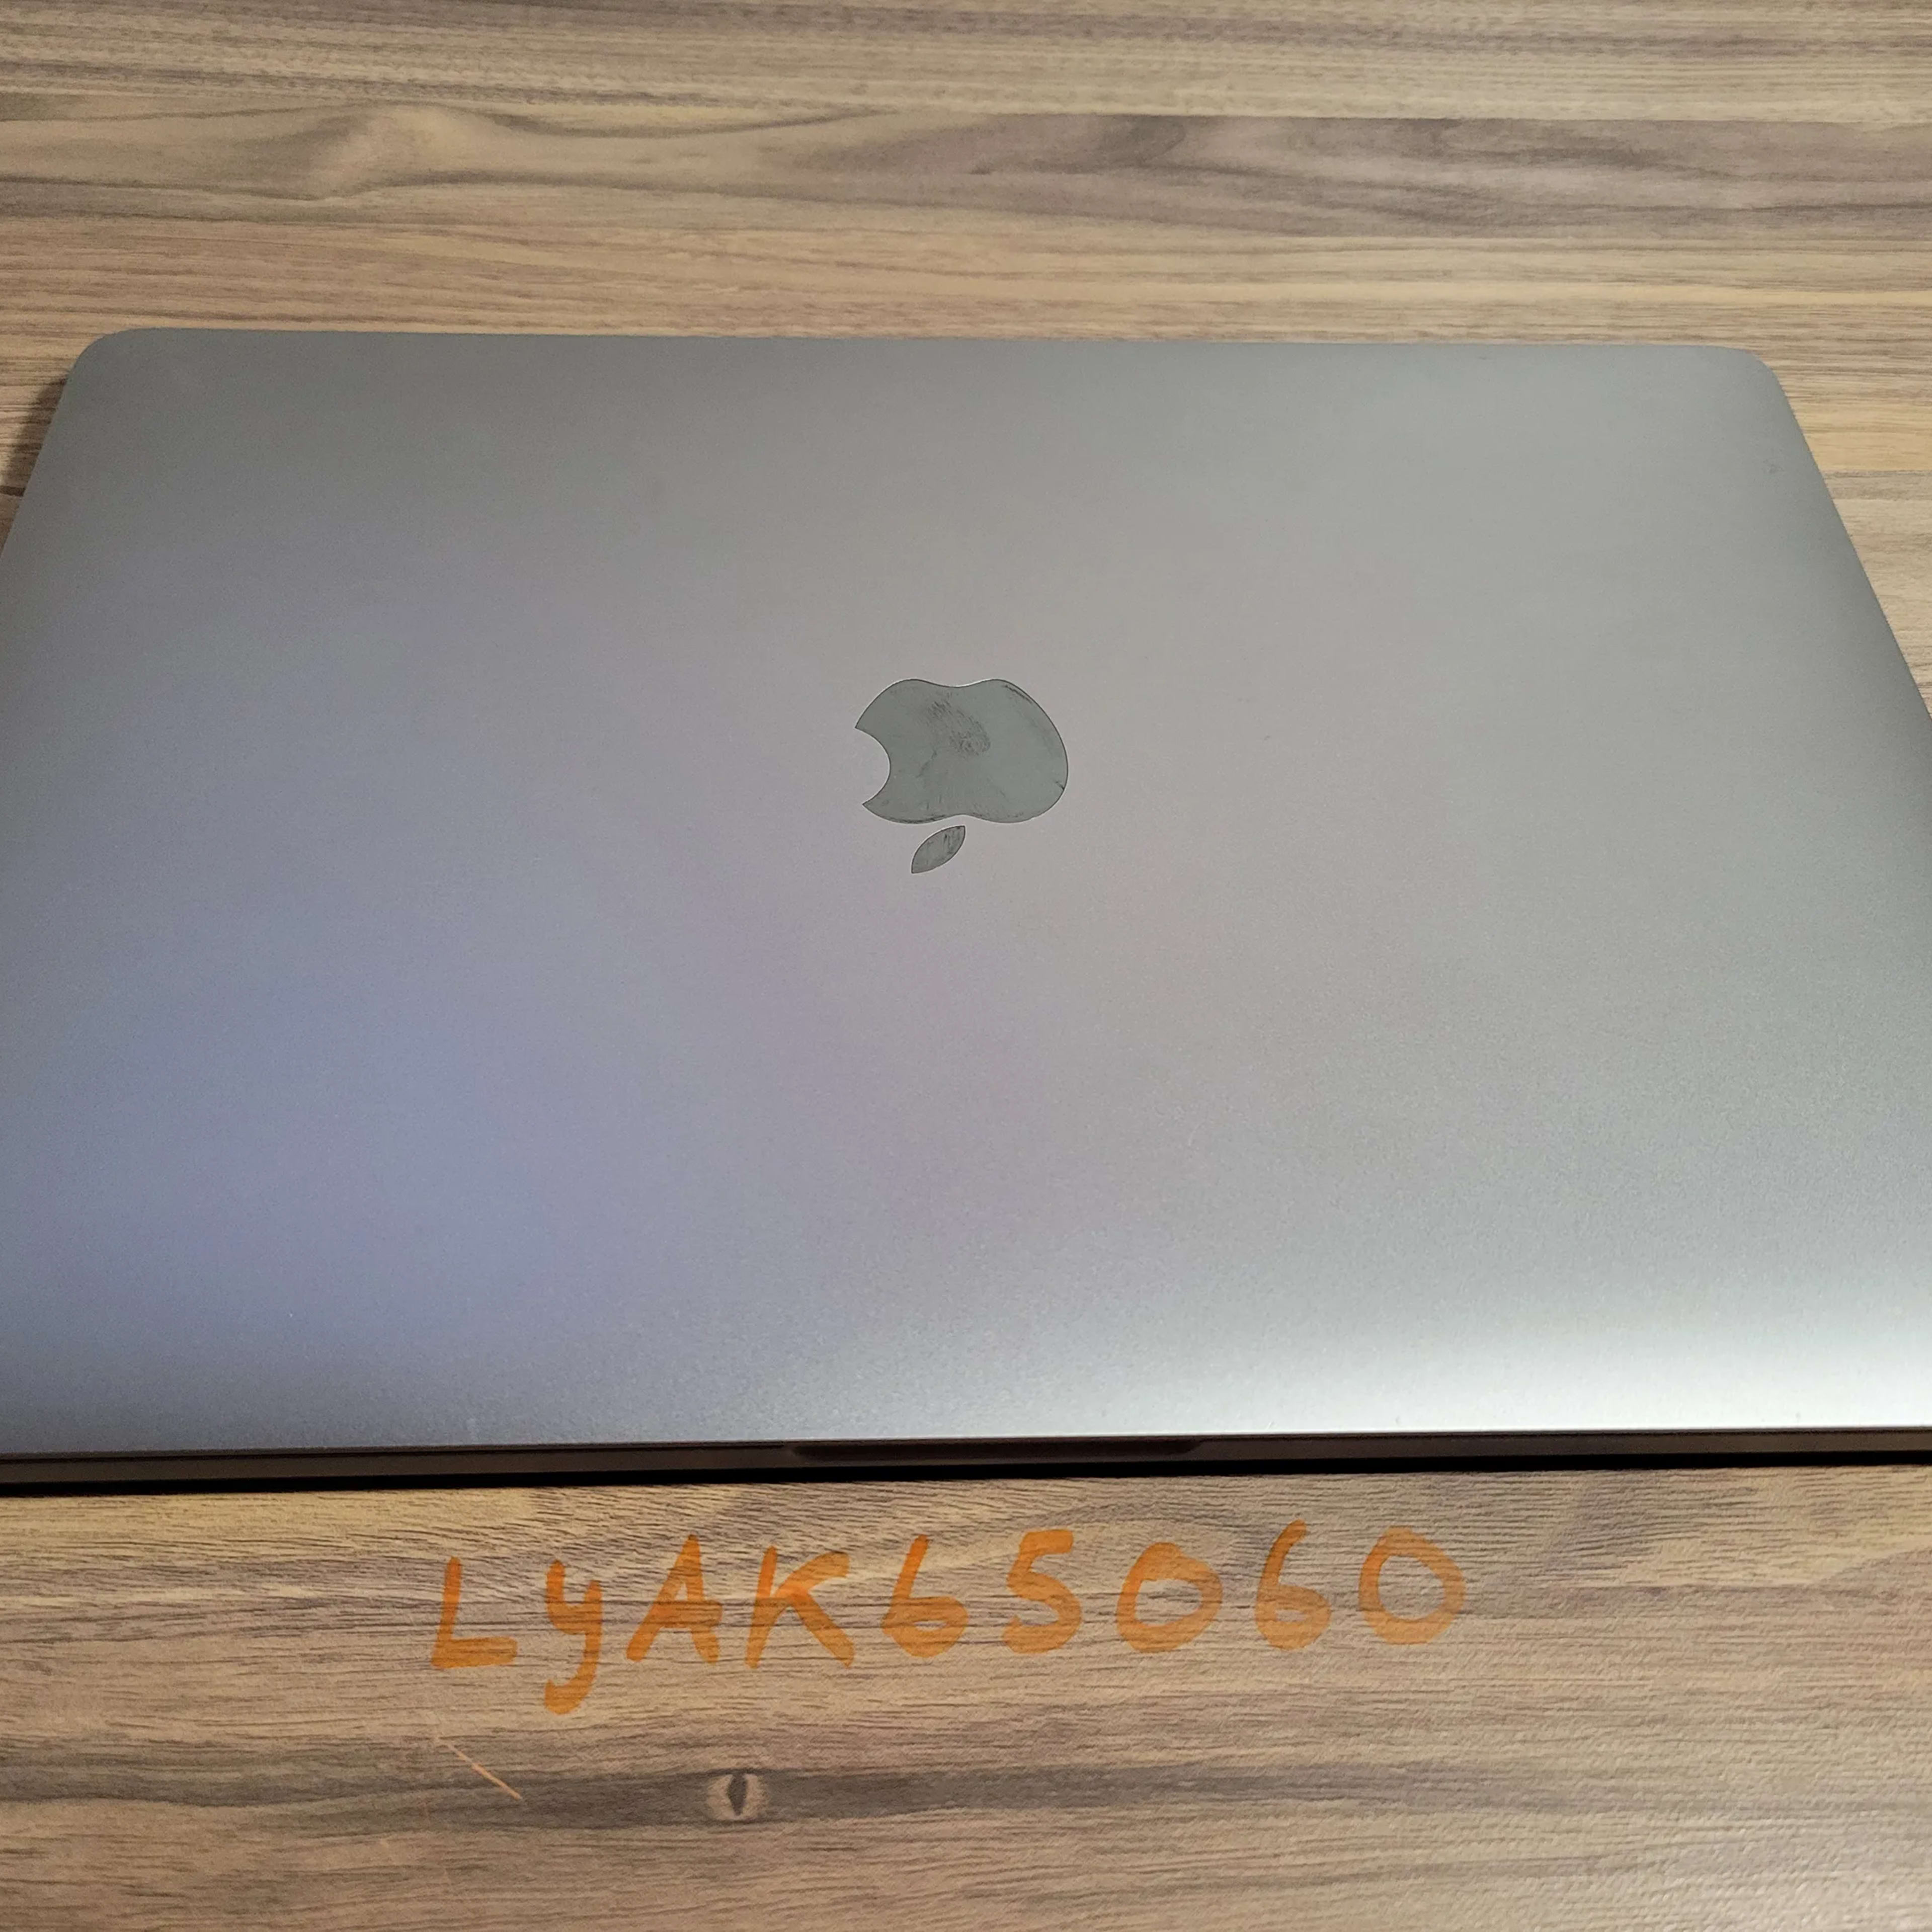 Apple Macbook Pro Laptop 2020 13-inch - 512GB - M1 Cpu - 8Gb ram